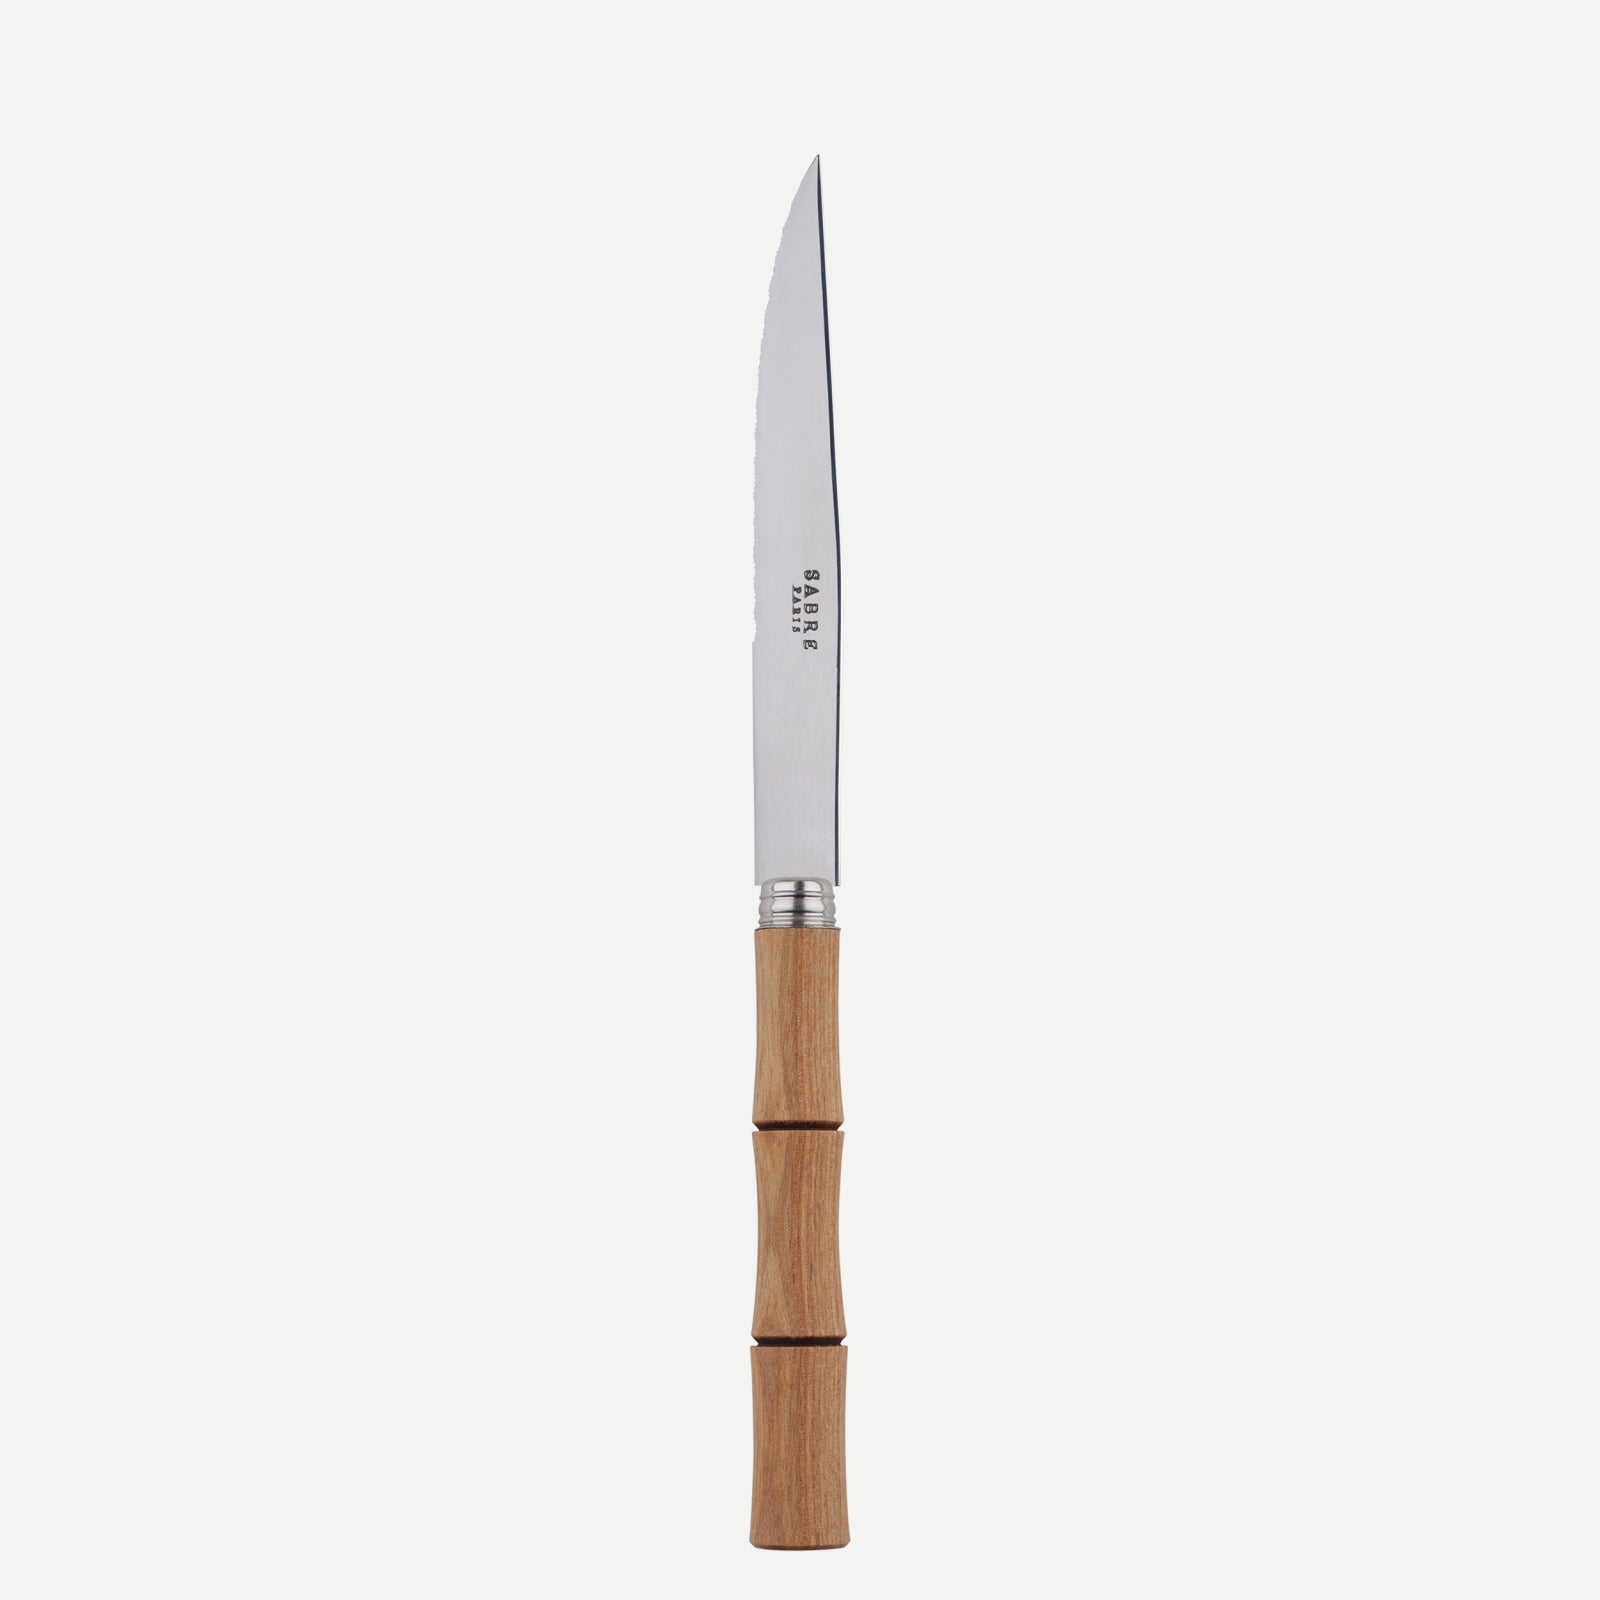 Steack knife - Bamboo - Light press wood